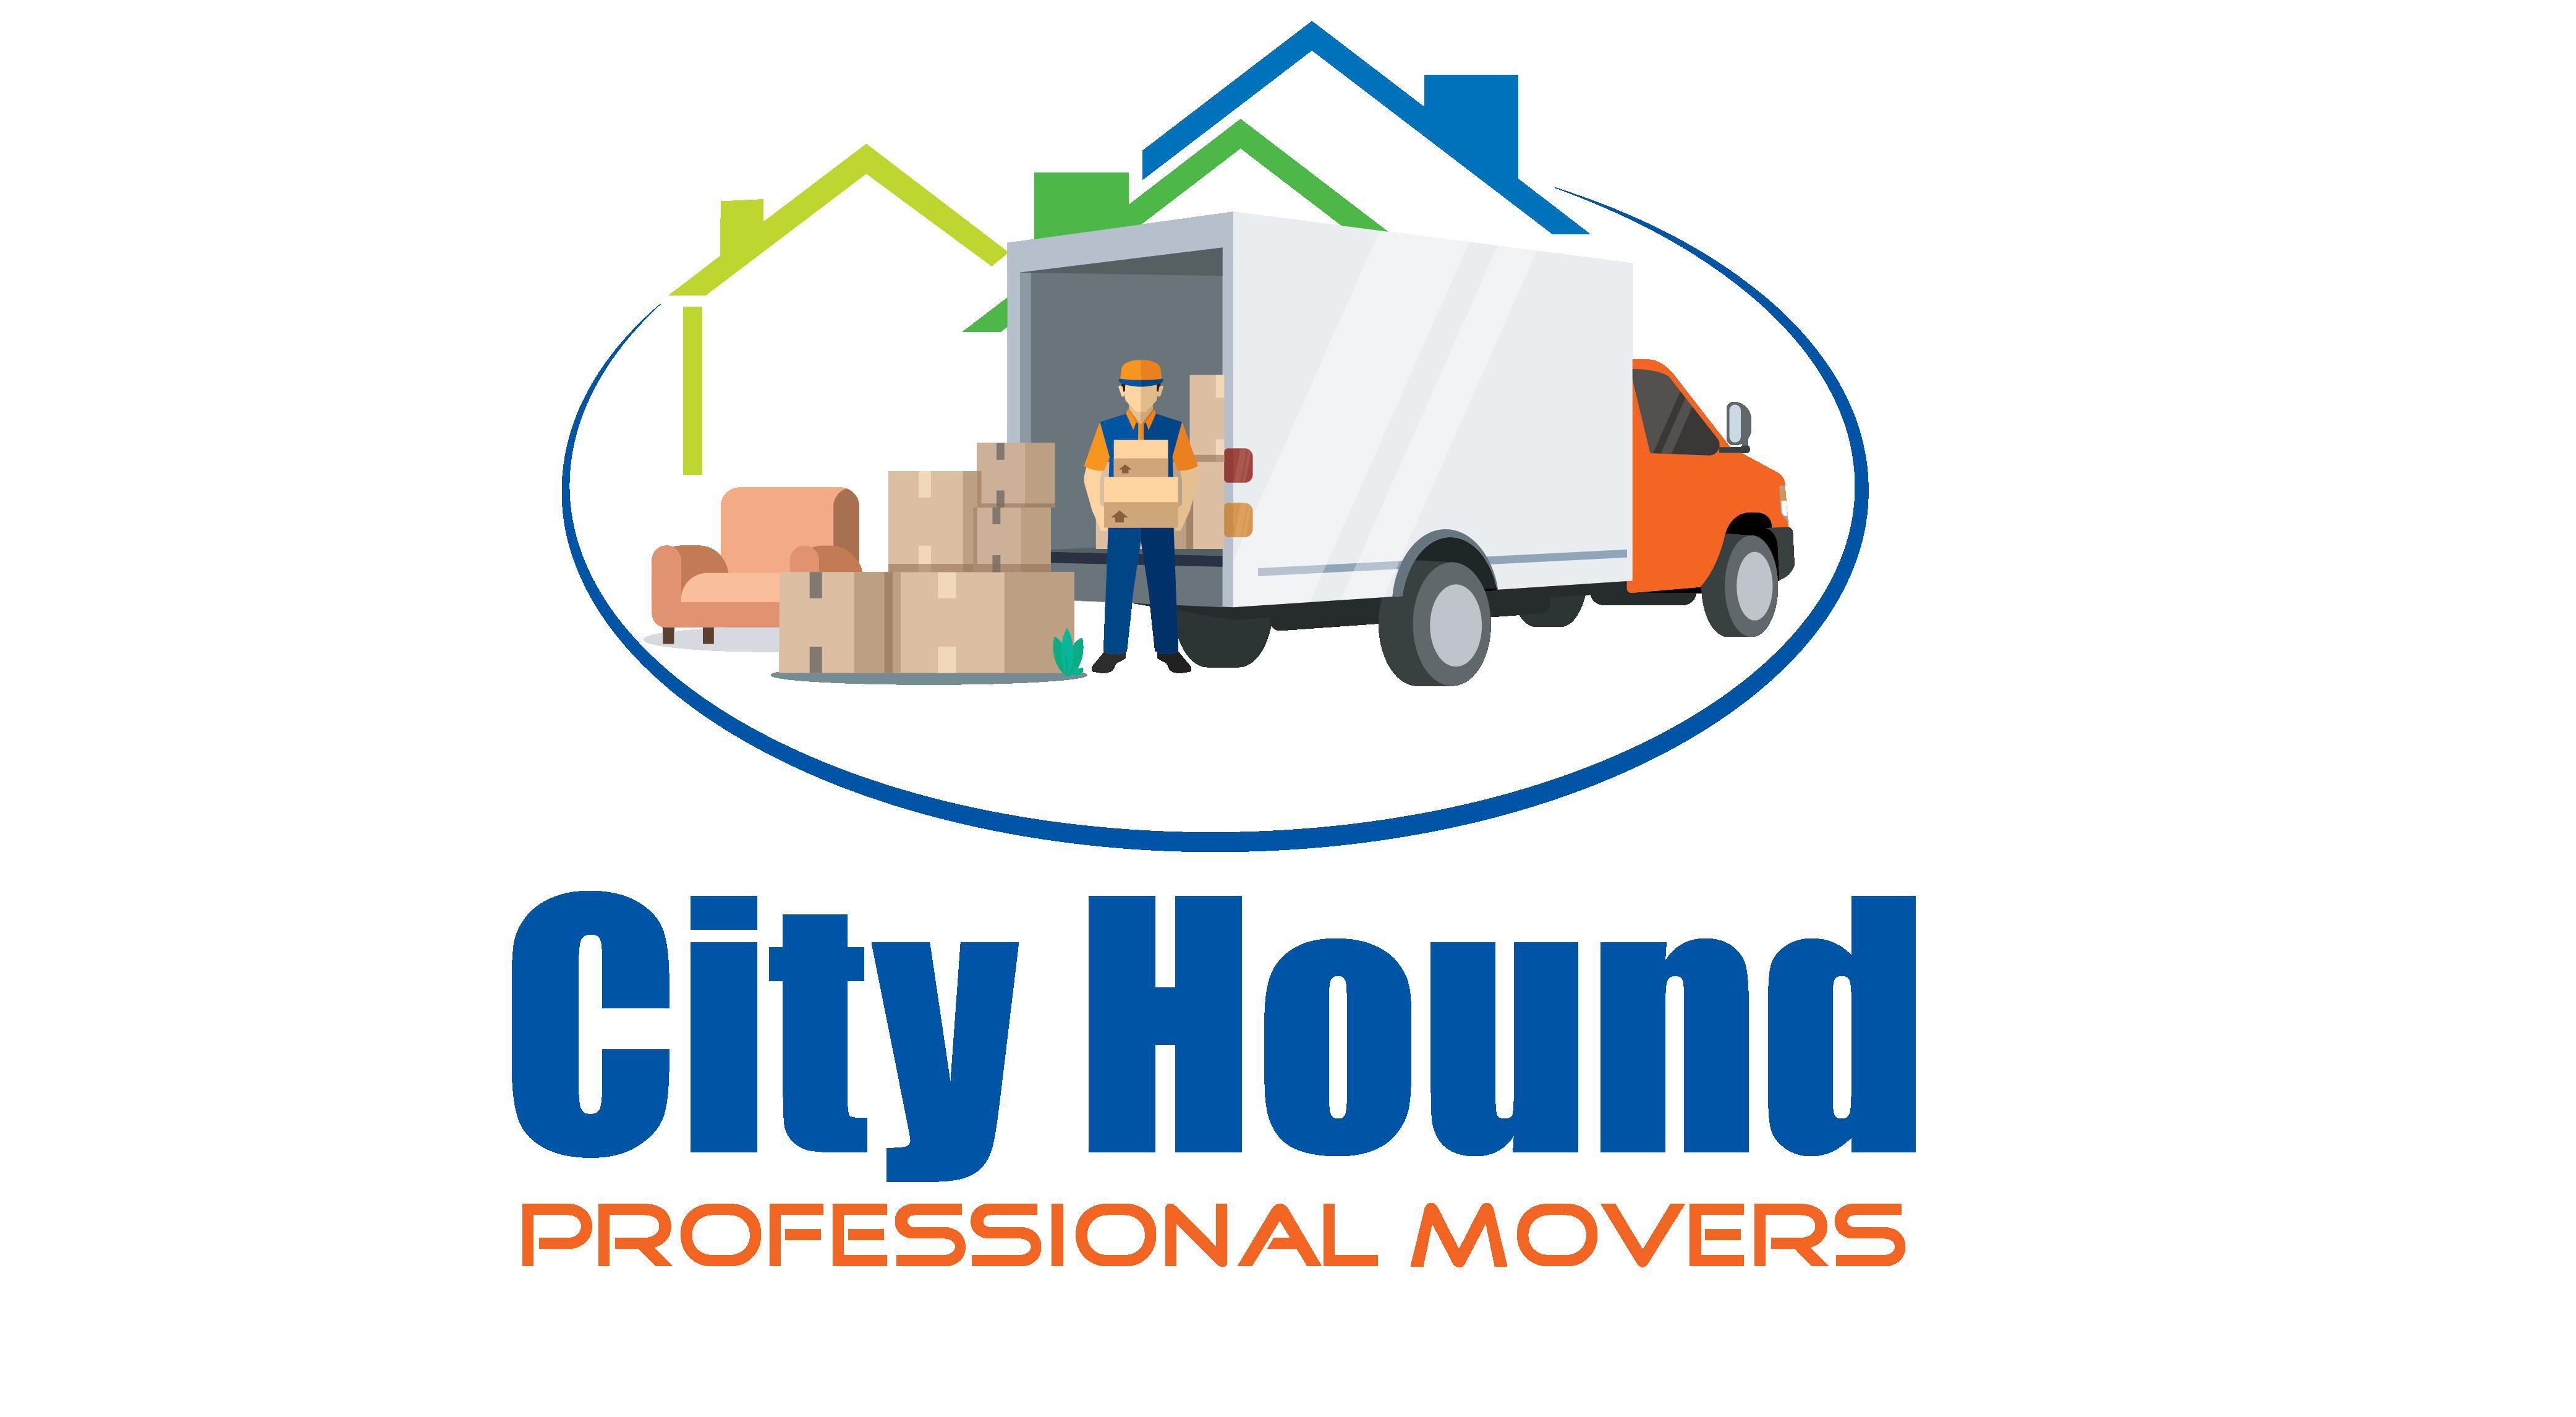 City Hound Professional Movers logo 1